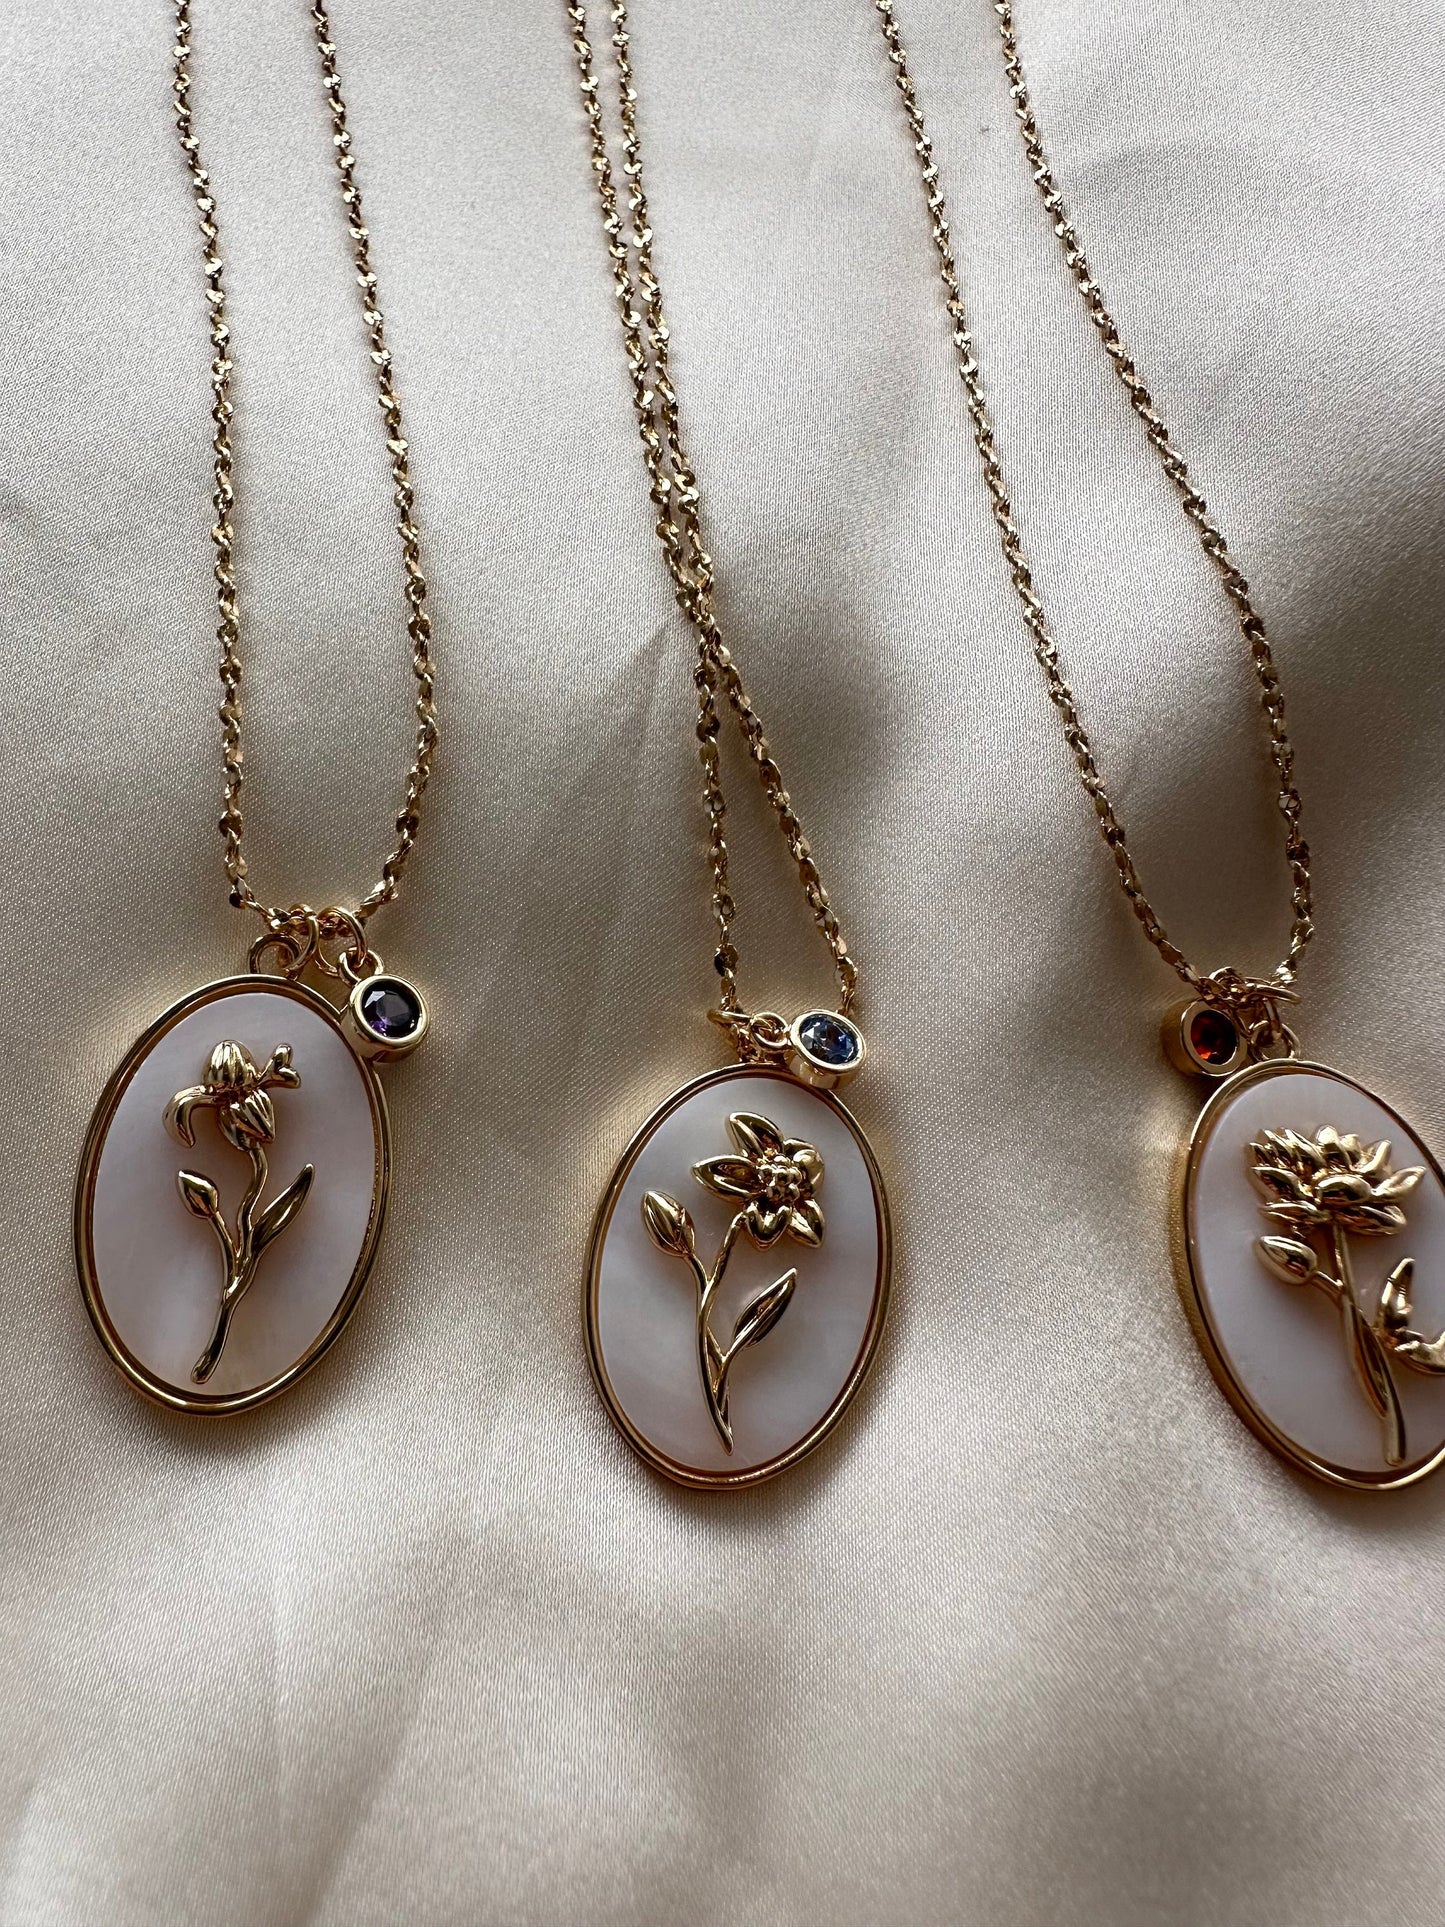 18K Gold Birth Flower Necklace | Birth Stone Charm | Birth Stone | Birthday Gift | Flower Charm | Gold Necklace | Christmas Gift l Zodiac